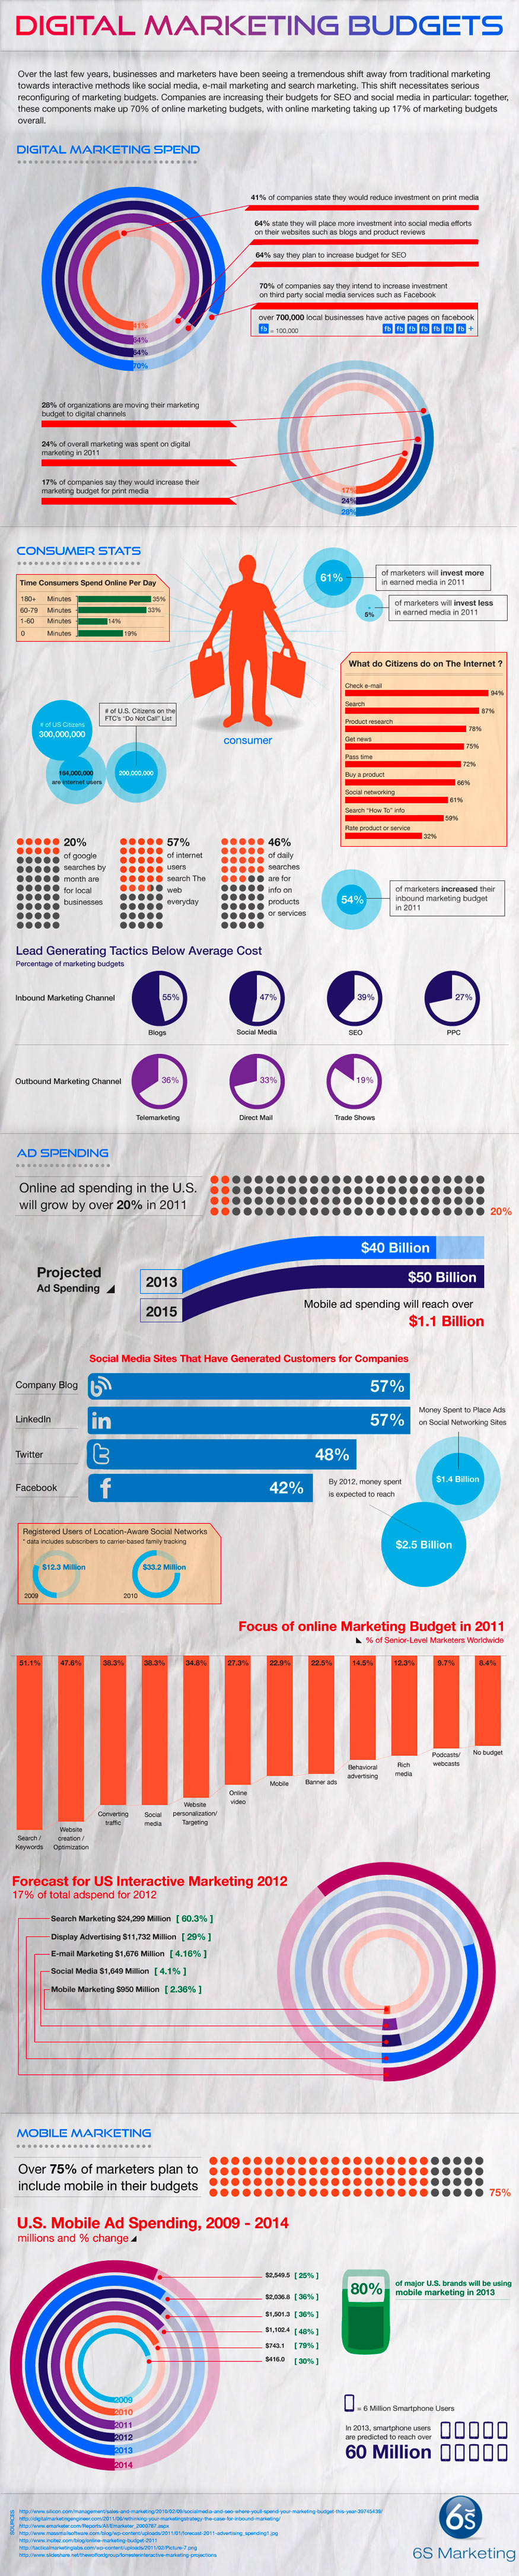 digital marketing budget trends 2012